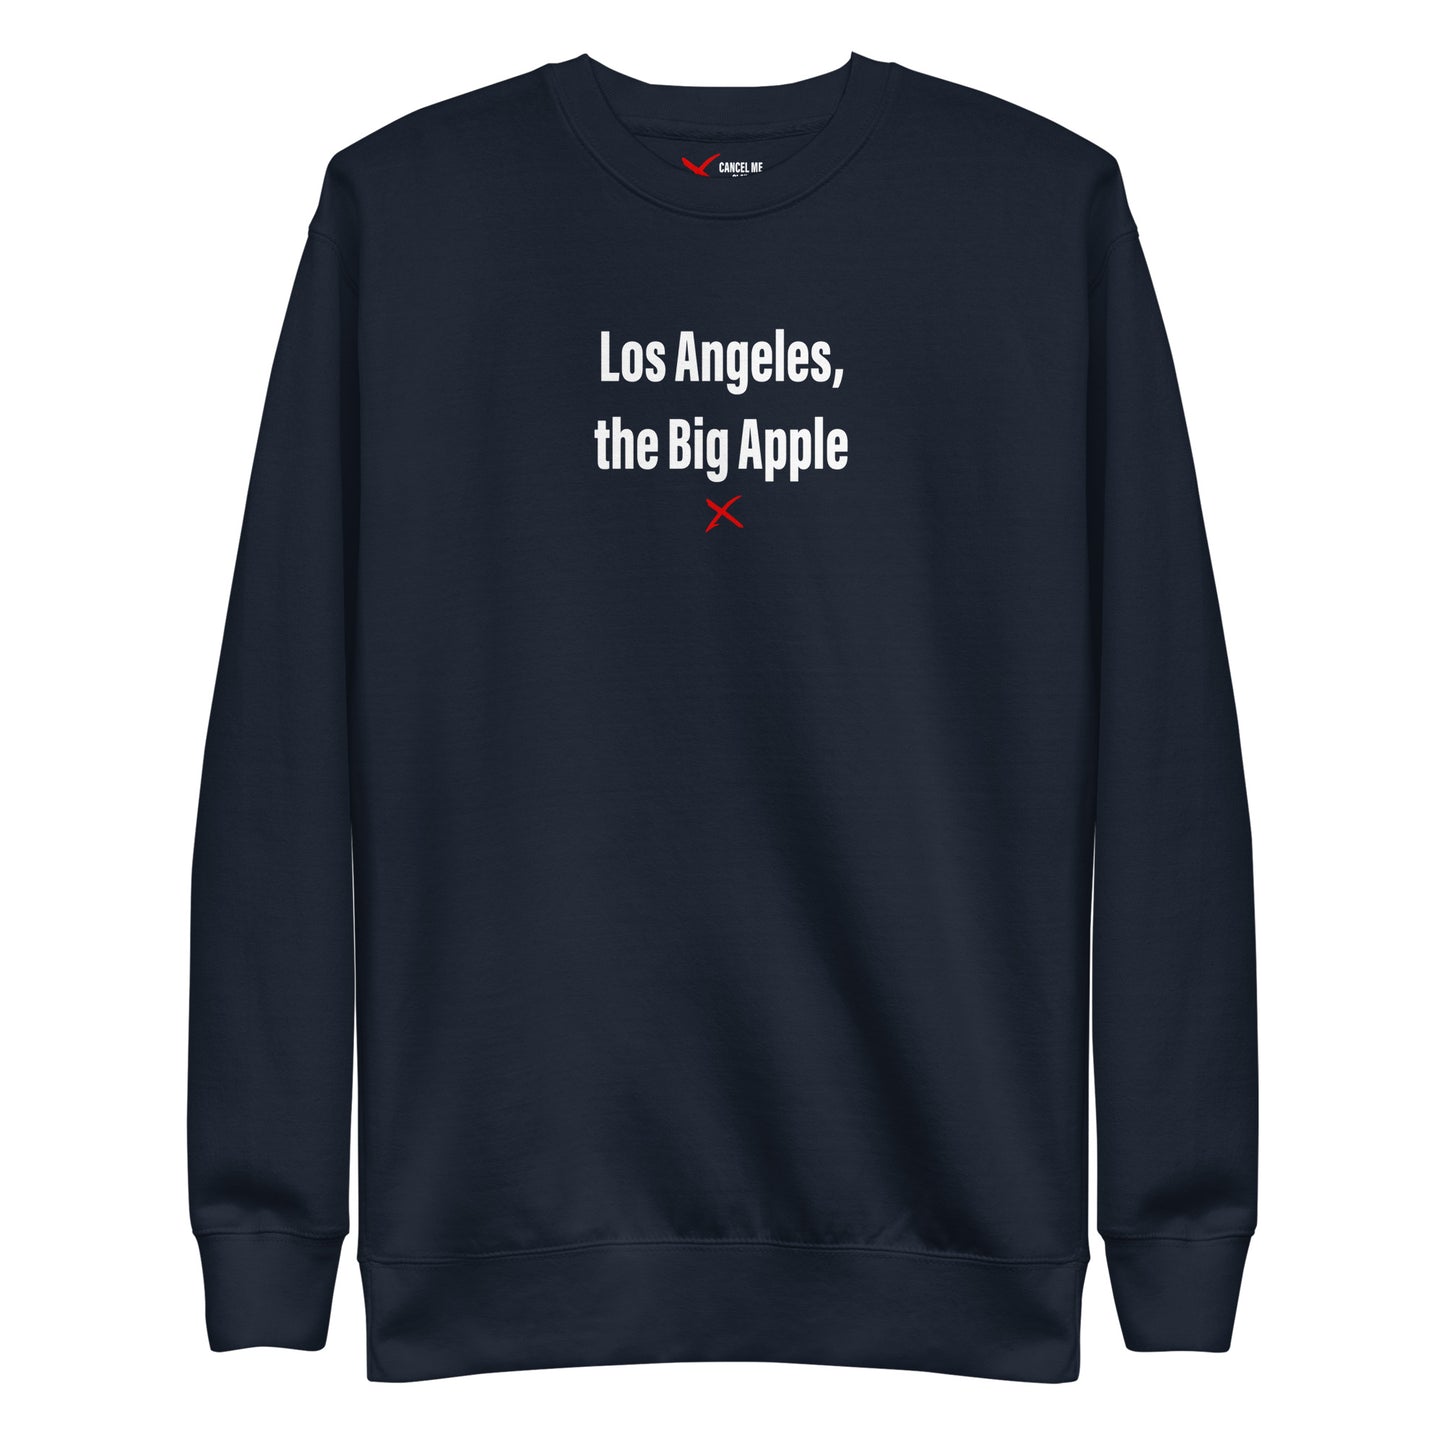 Los Angeles, the Big Apple - Sweatshirt